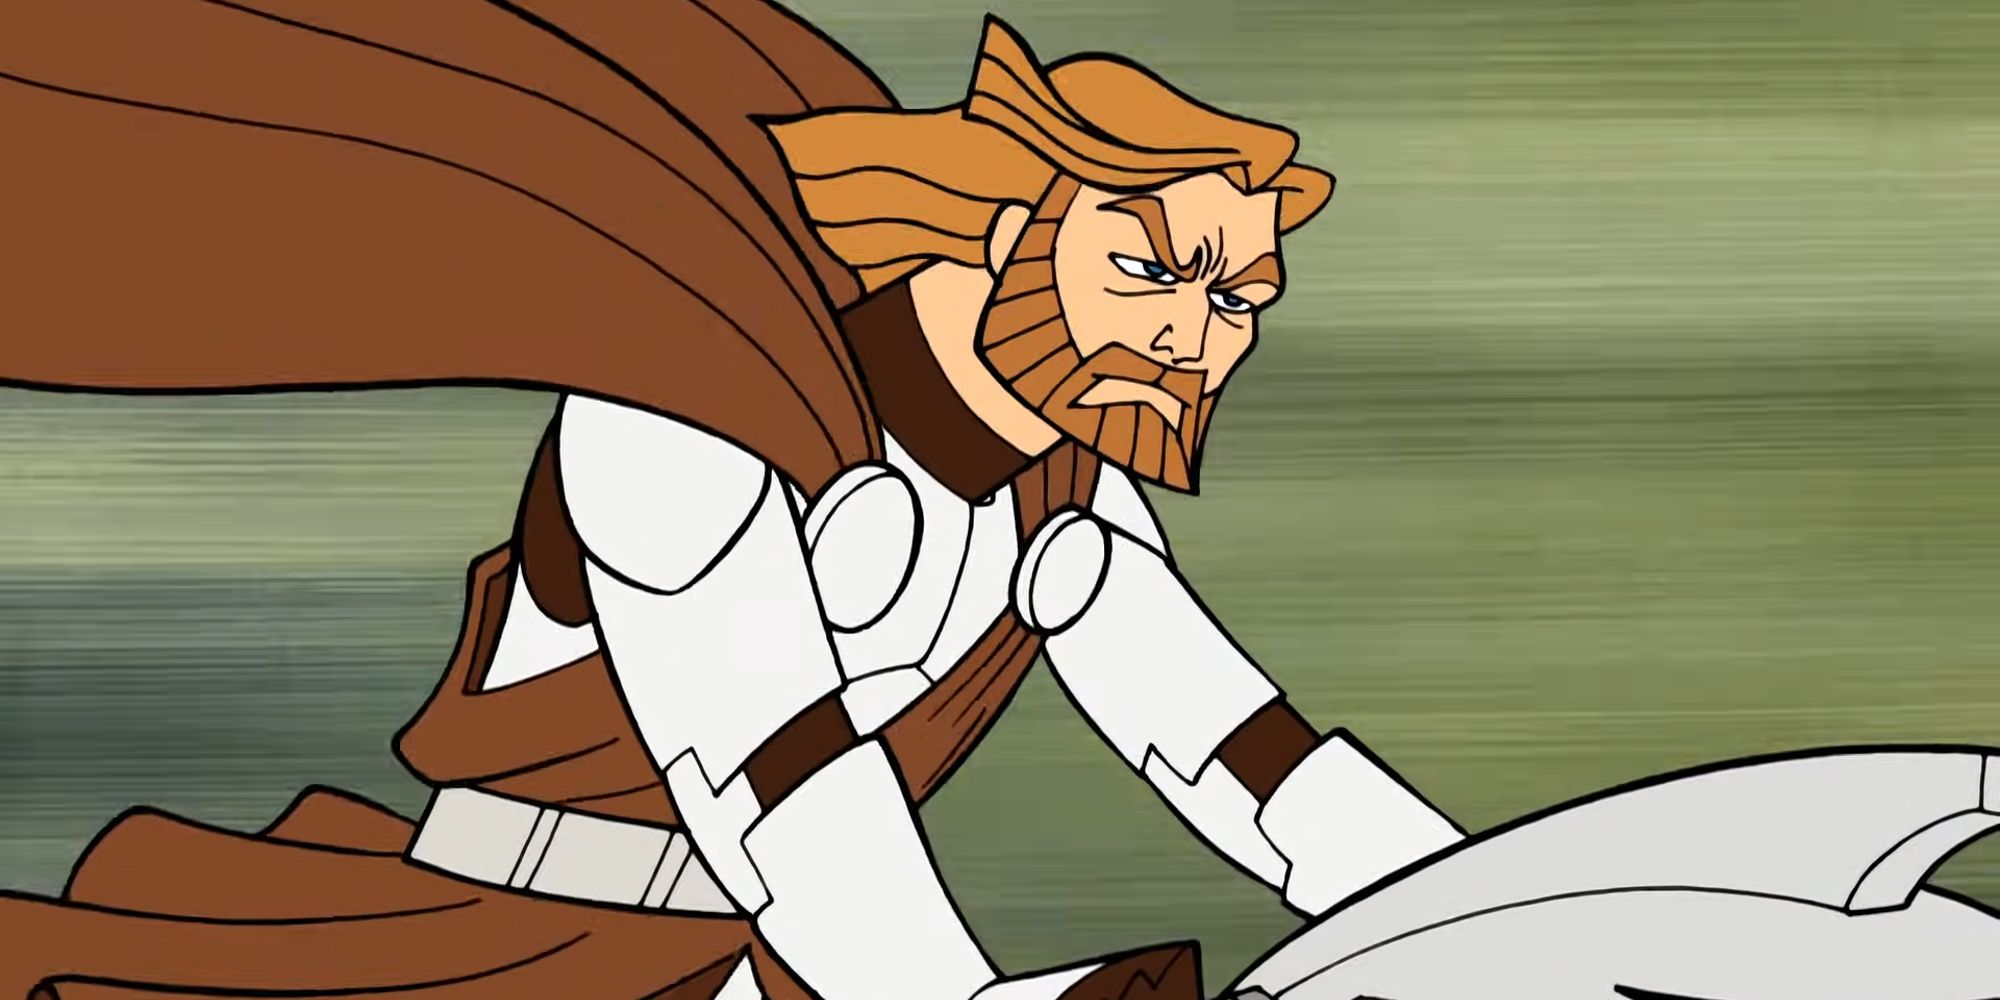 Obi Wan Kenobi riding on a speeder bike in Star Wars Clone Wars 2003